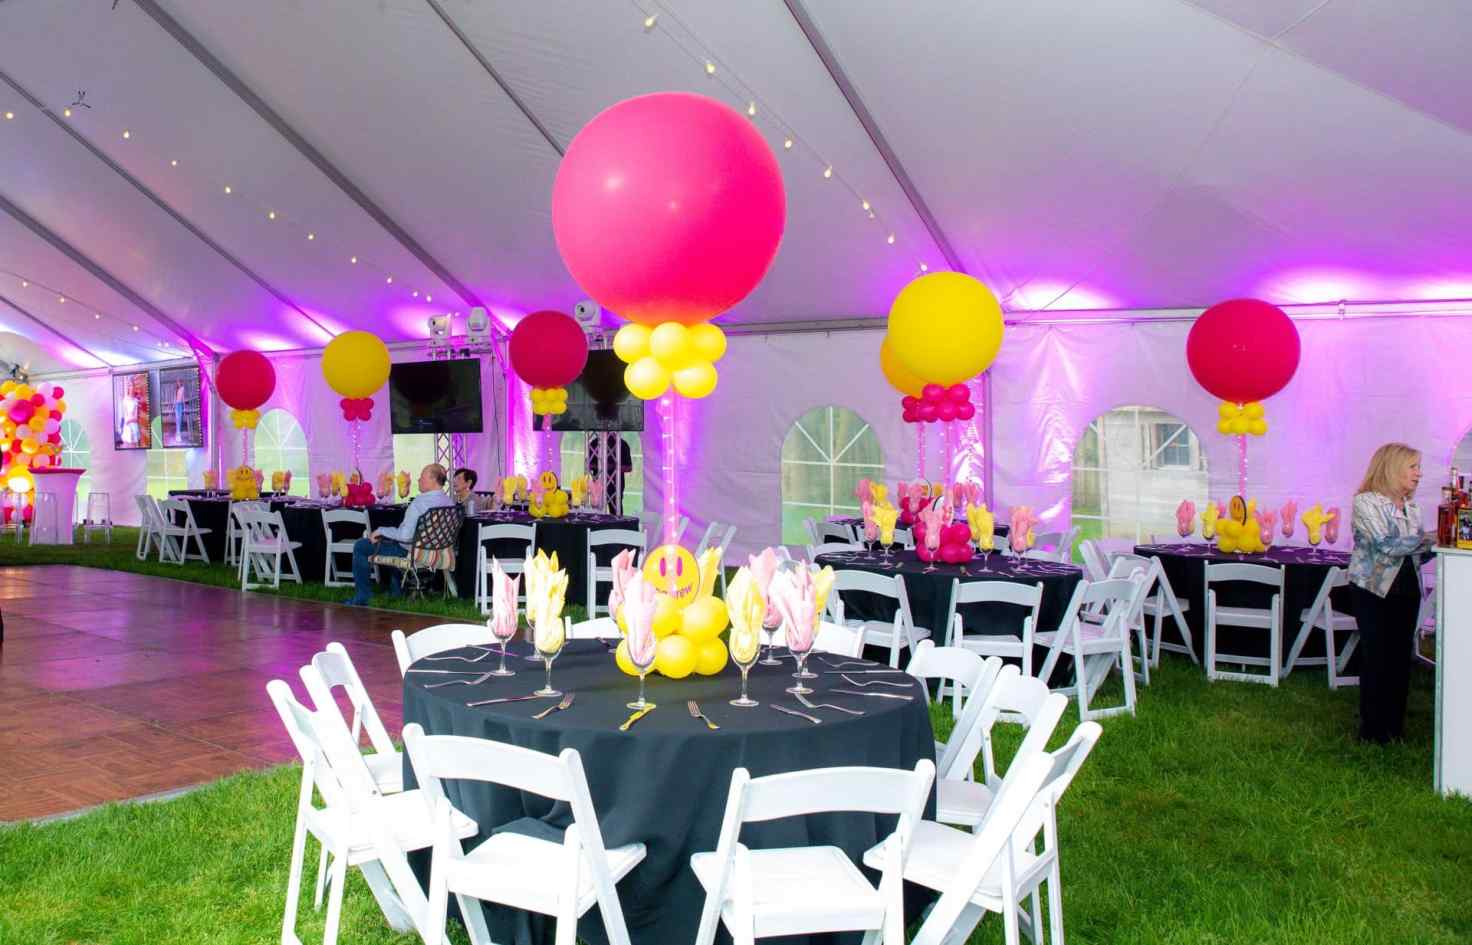 Outdoor Decor & Balloons · Covid Safe Events · Party Design